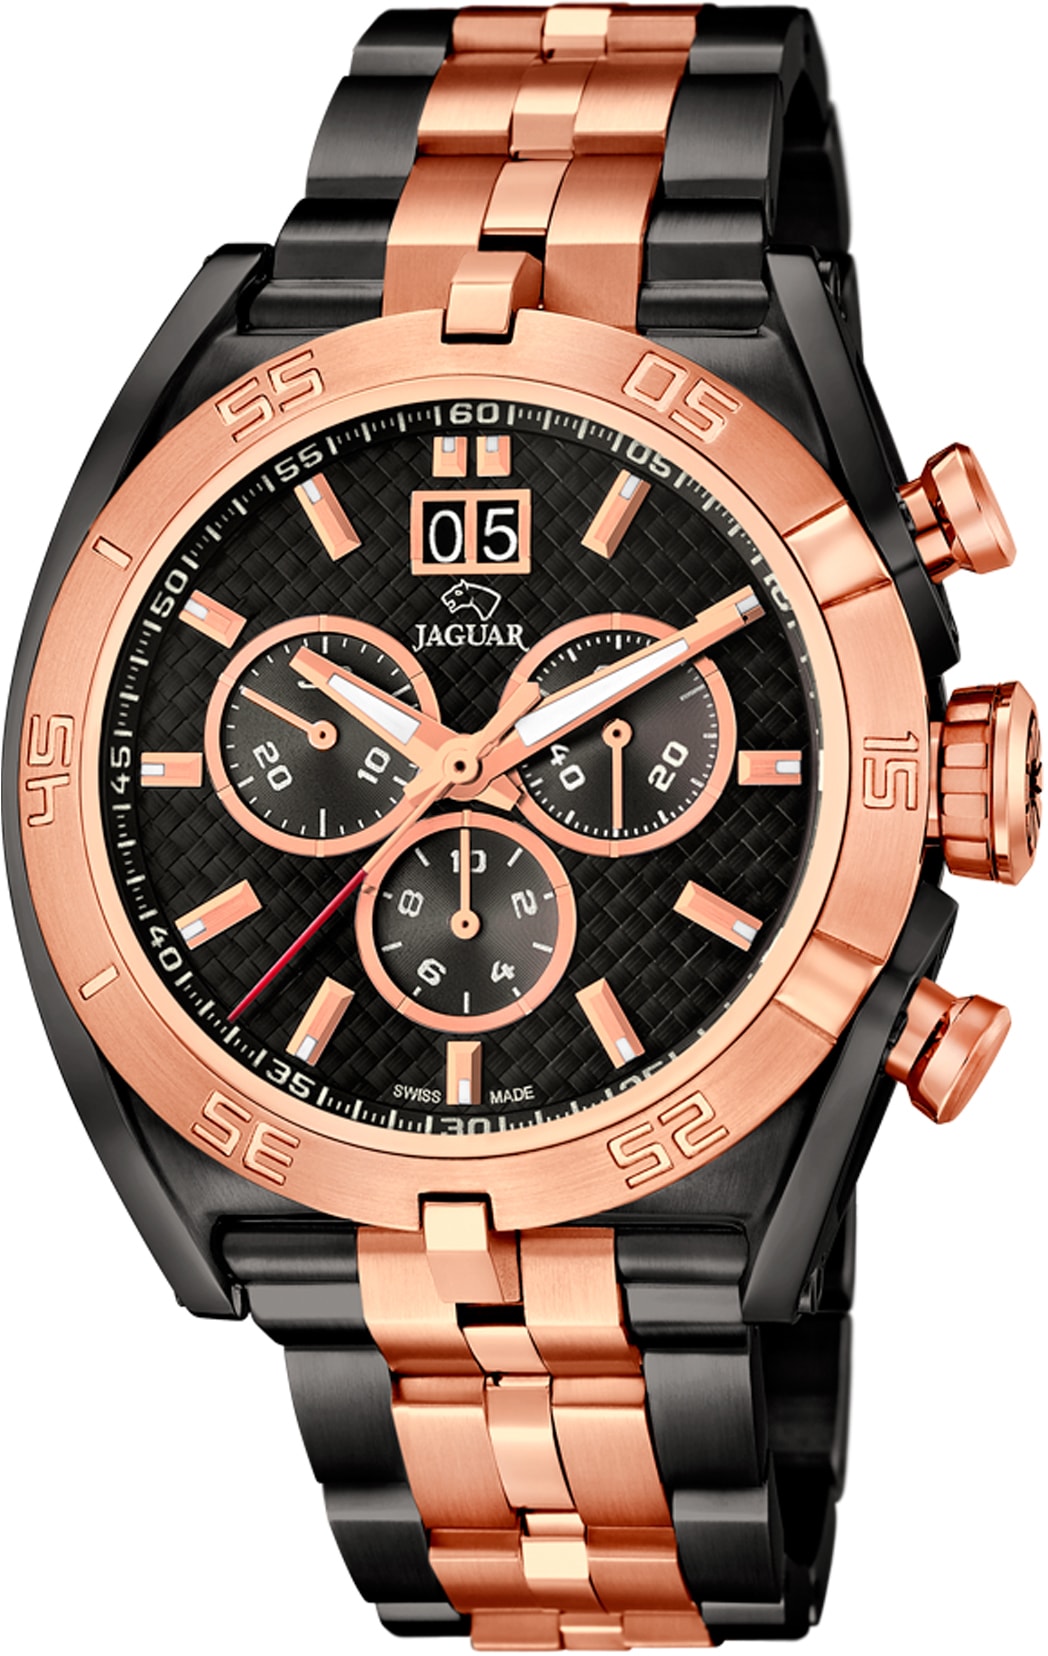 Top-Sportler Jaguar Chronograph OTTO »Special Edition, online kaufen J811/1« bei